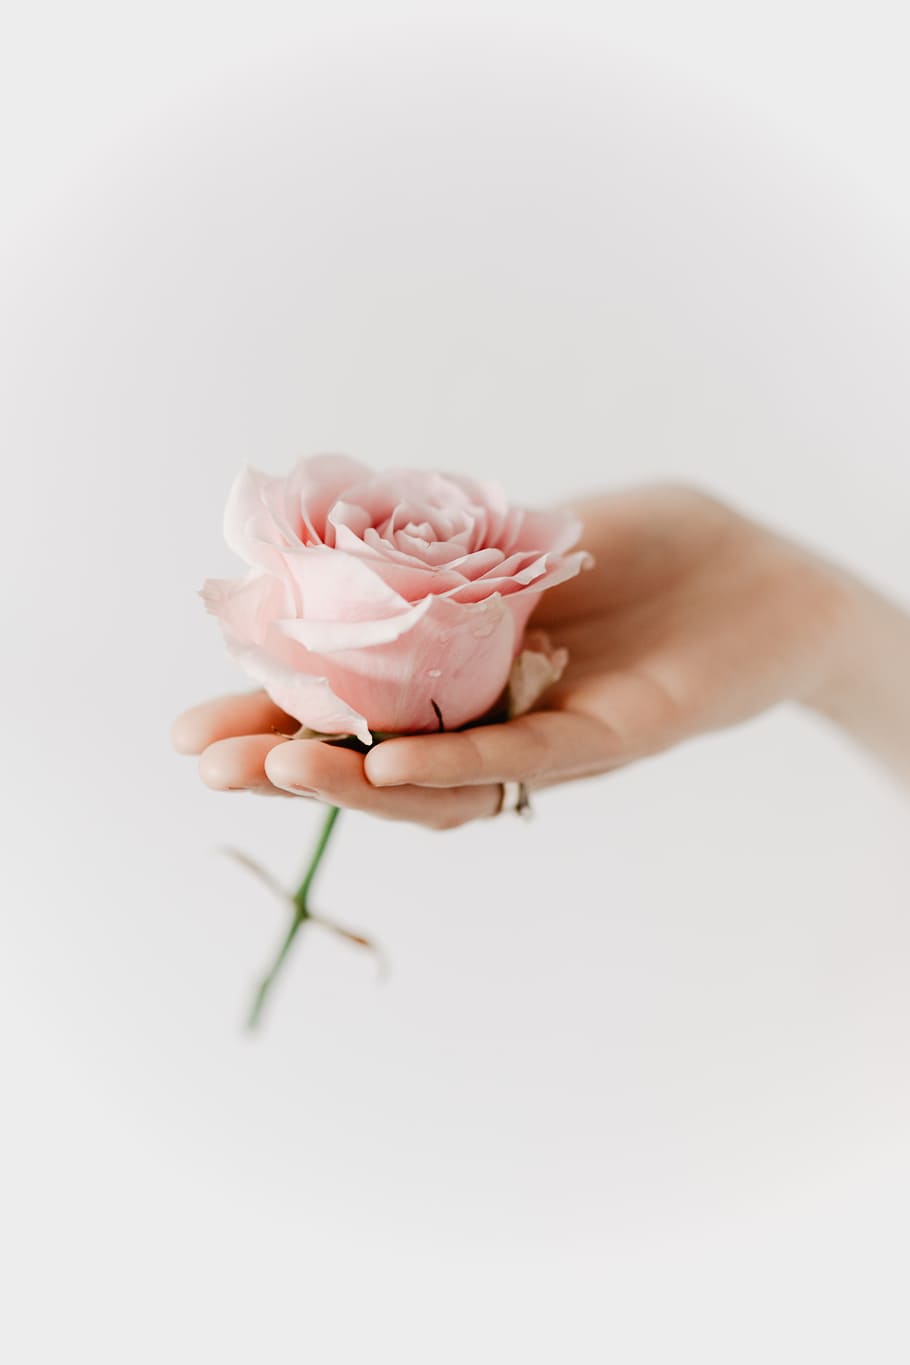 holding, pink, rose, flowers, roses, floral, human hand, hand, flower, studio shot